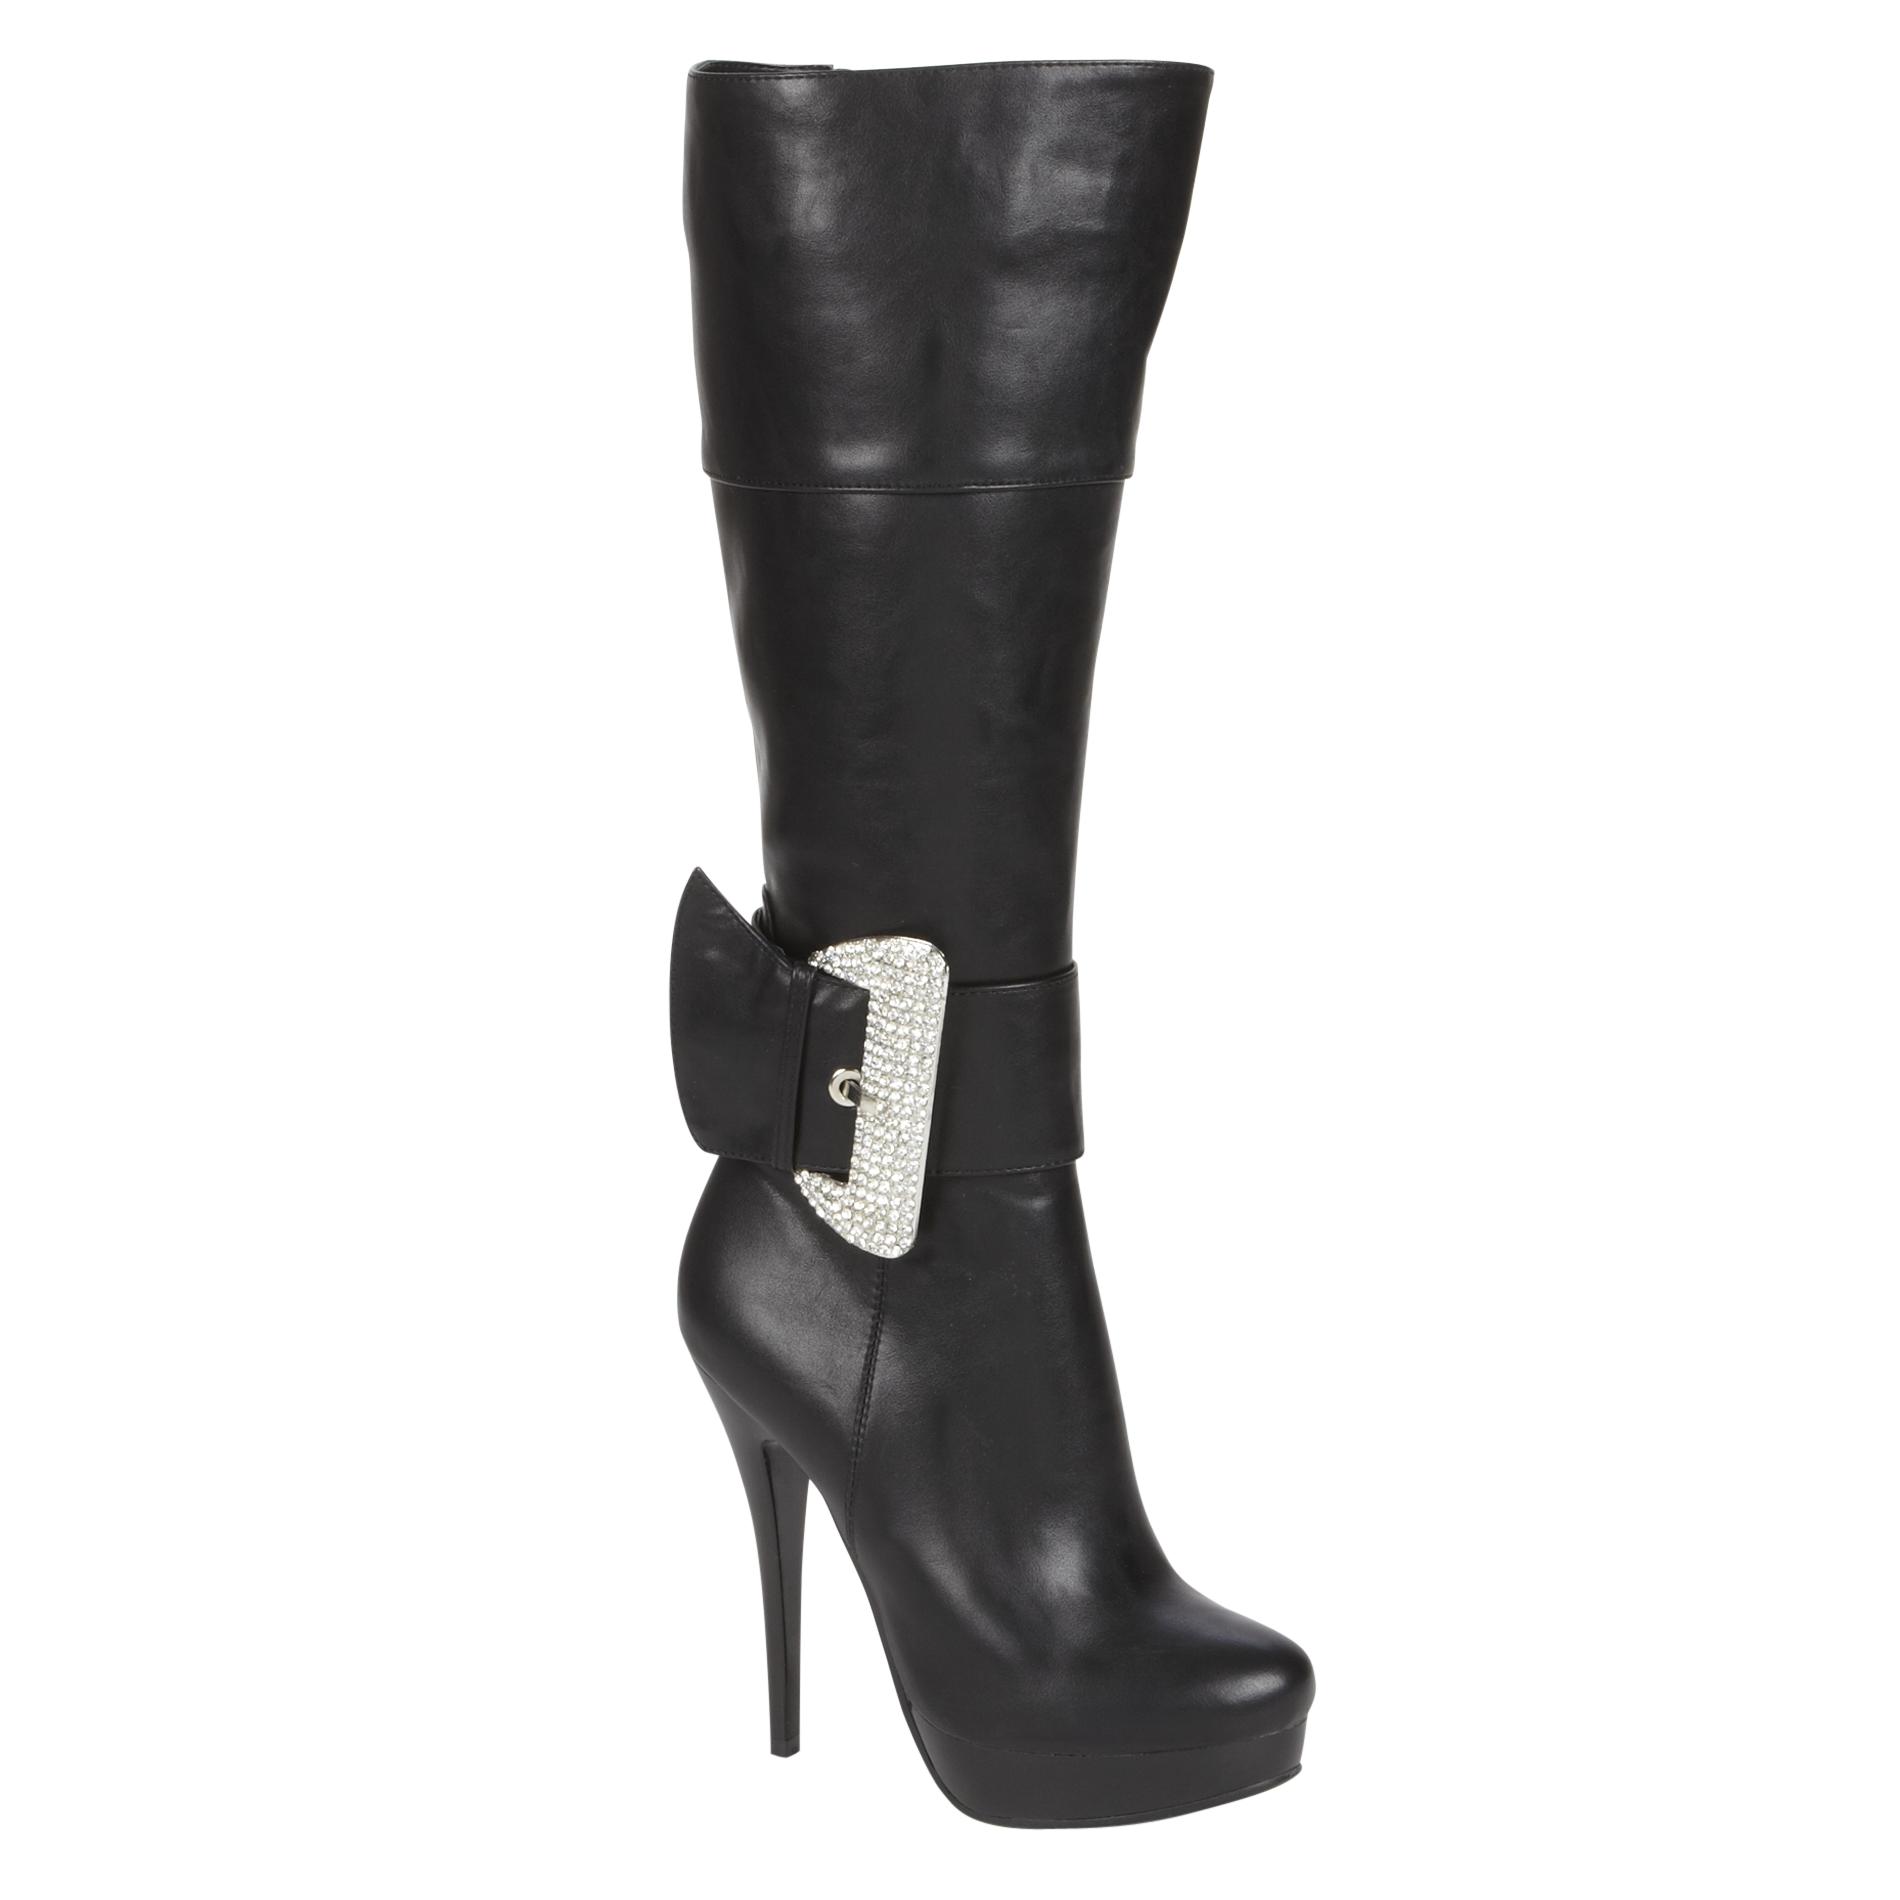 Italina Women's Fashion Boot Callie - Black